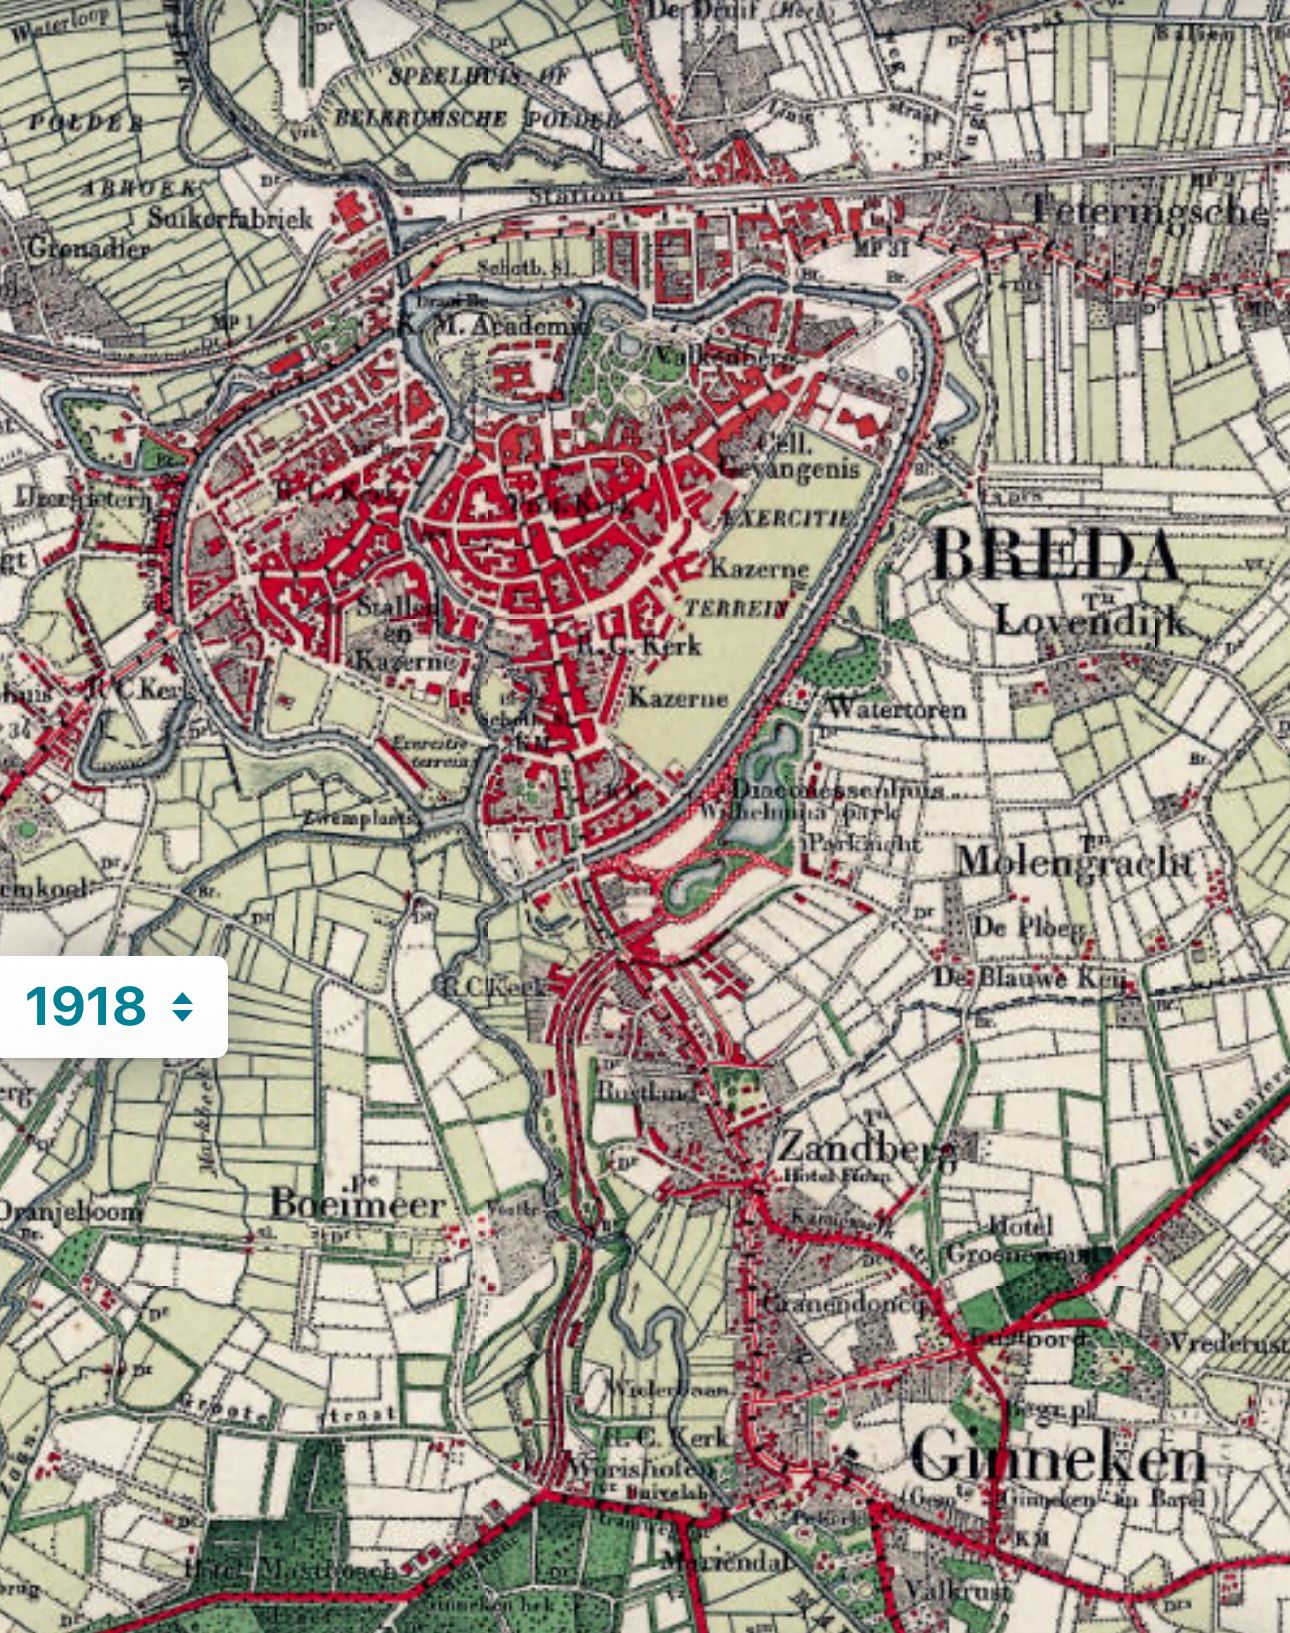 De stad Breda in 1918